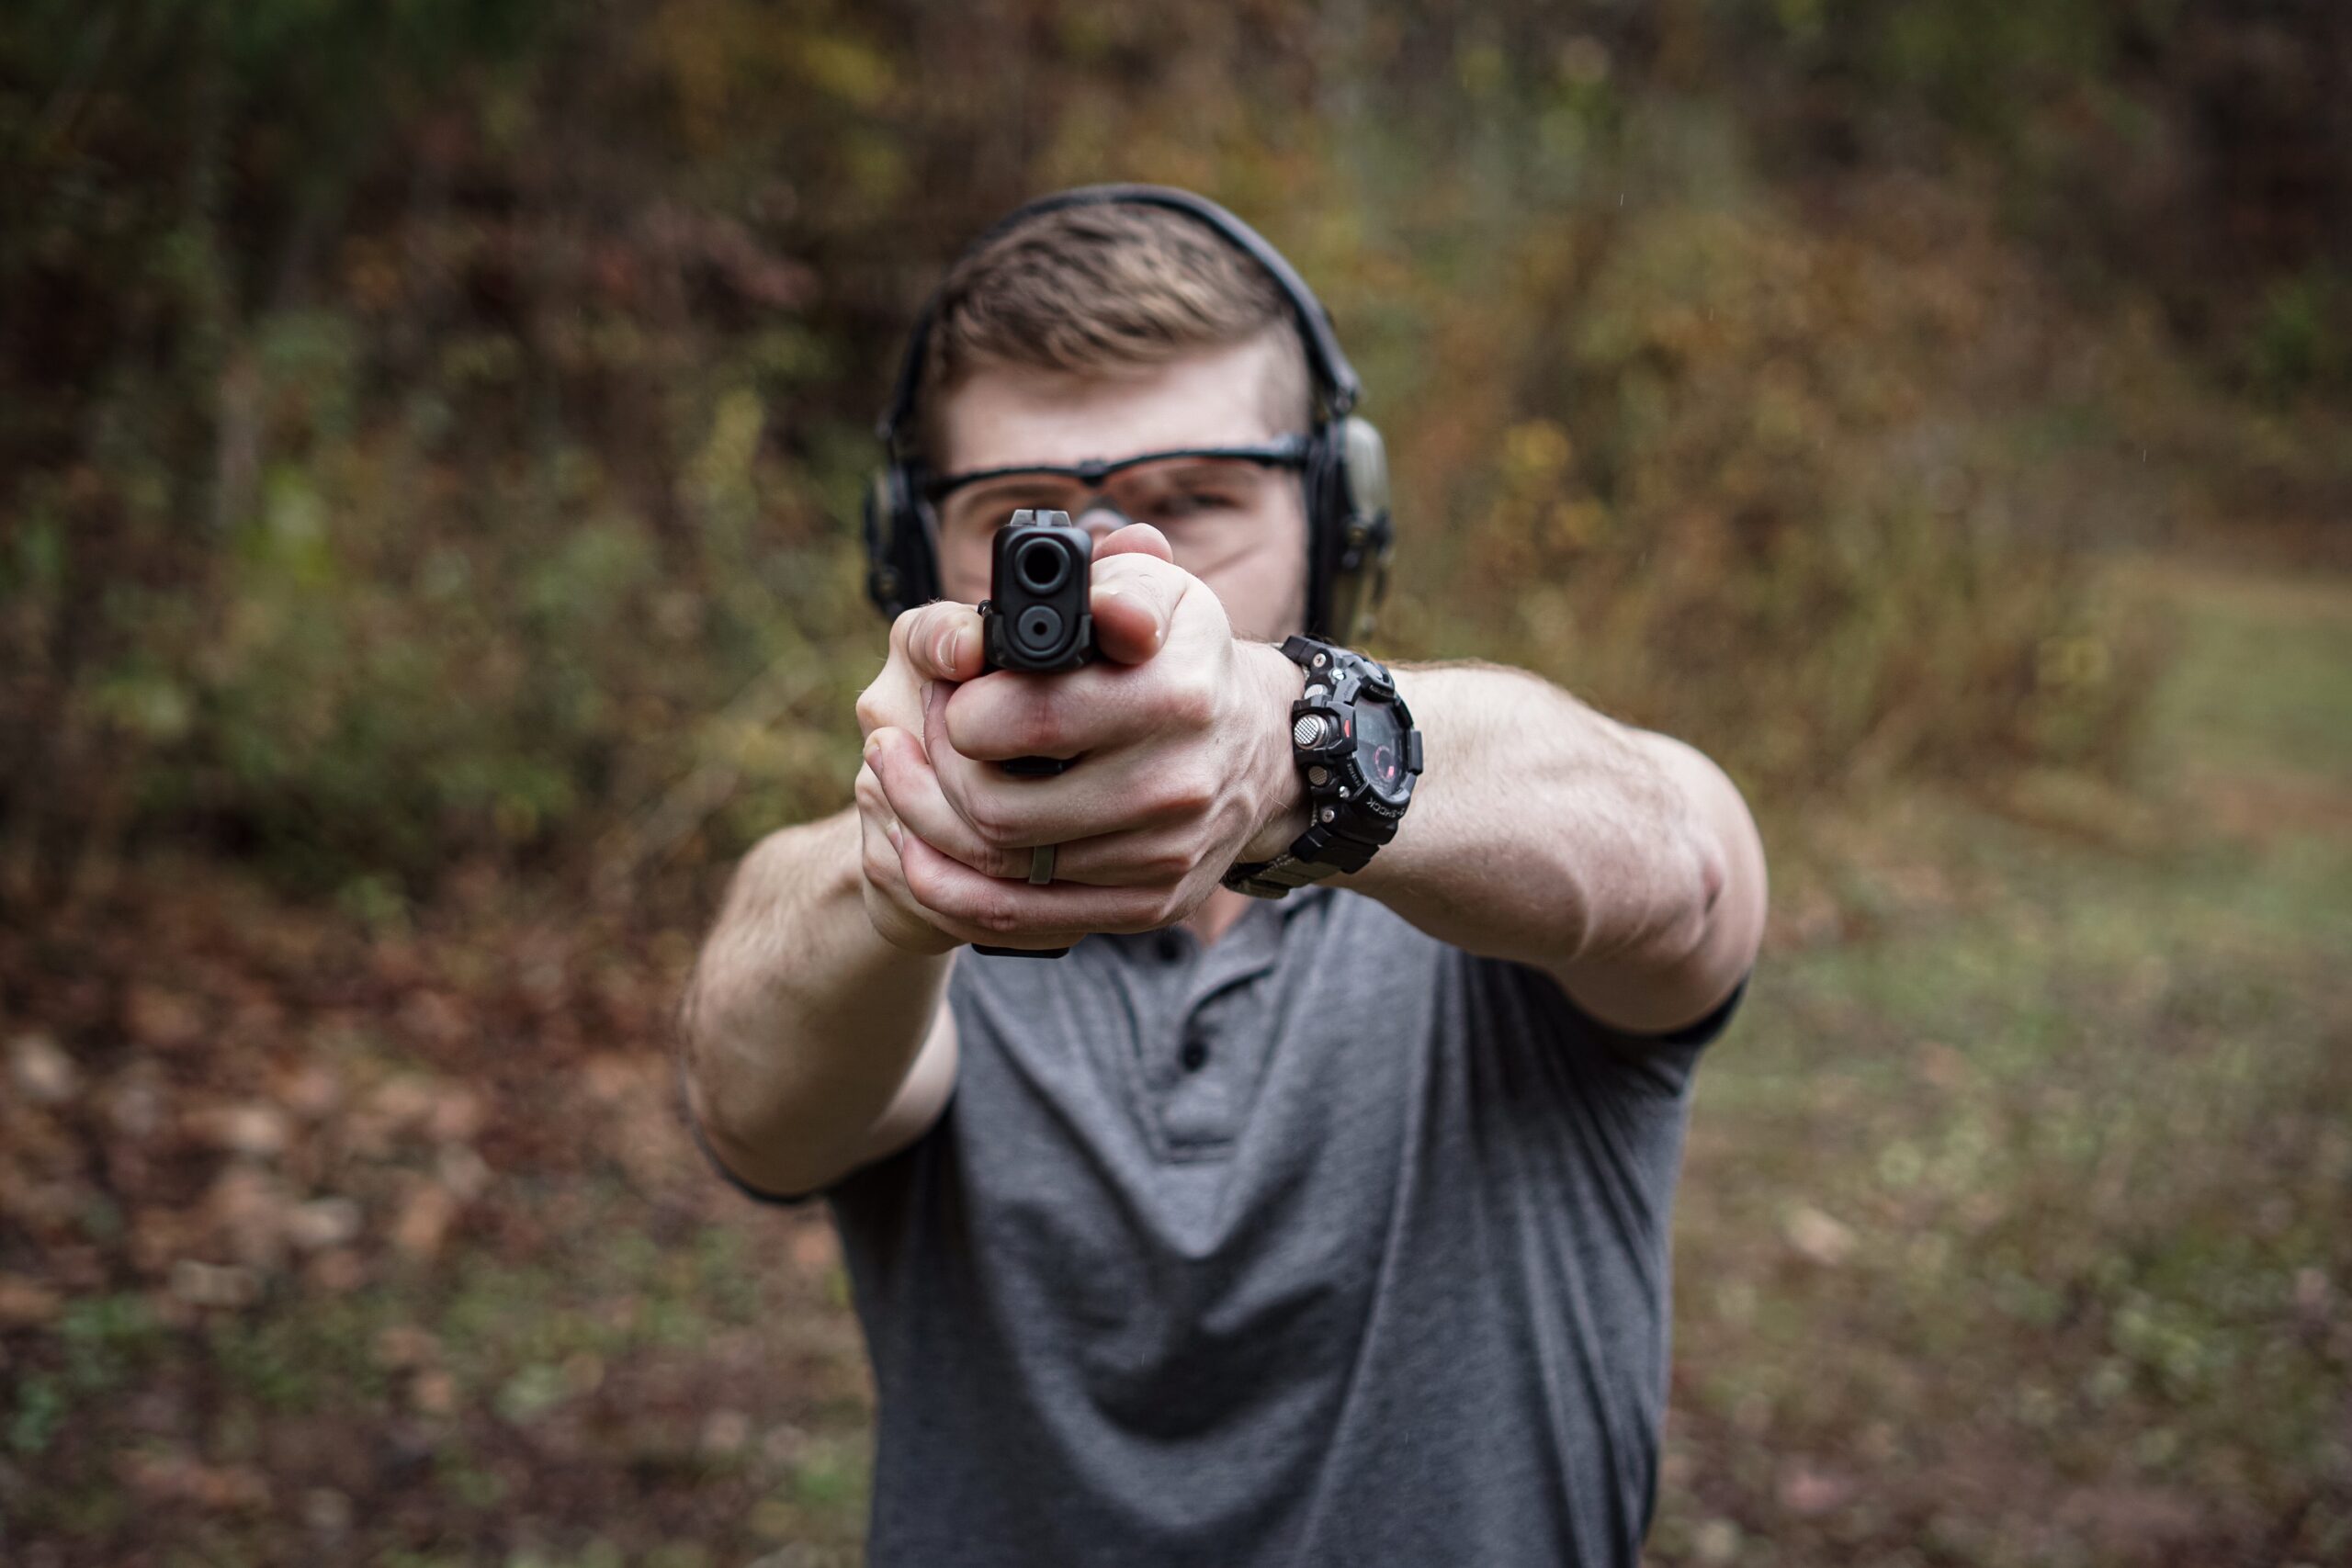 The author firing at Glock 19 at a shooting range